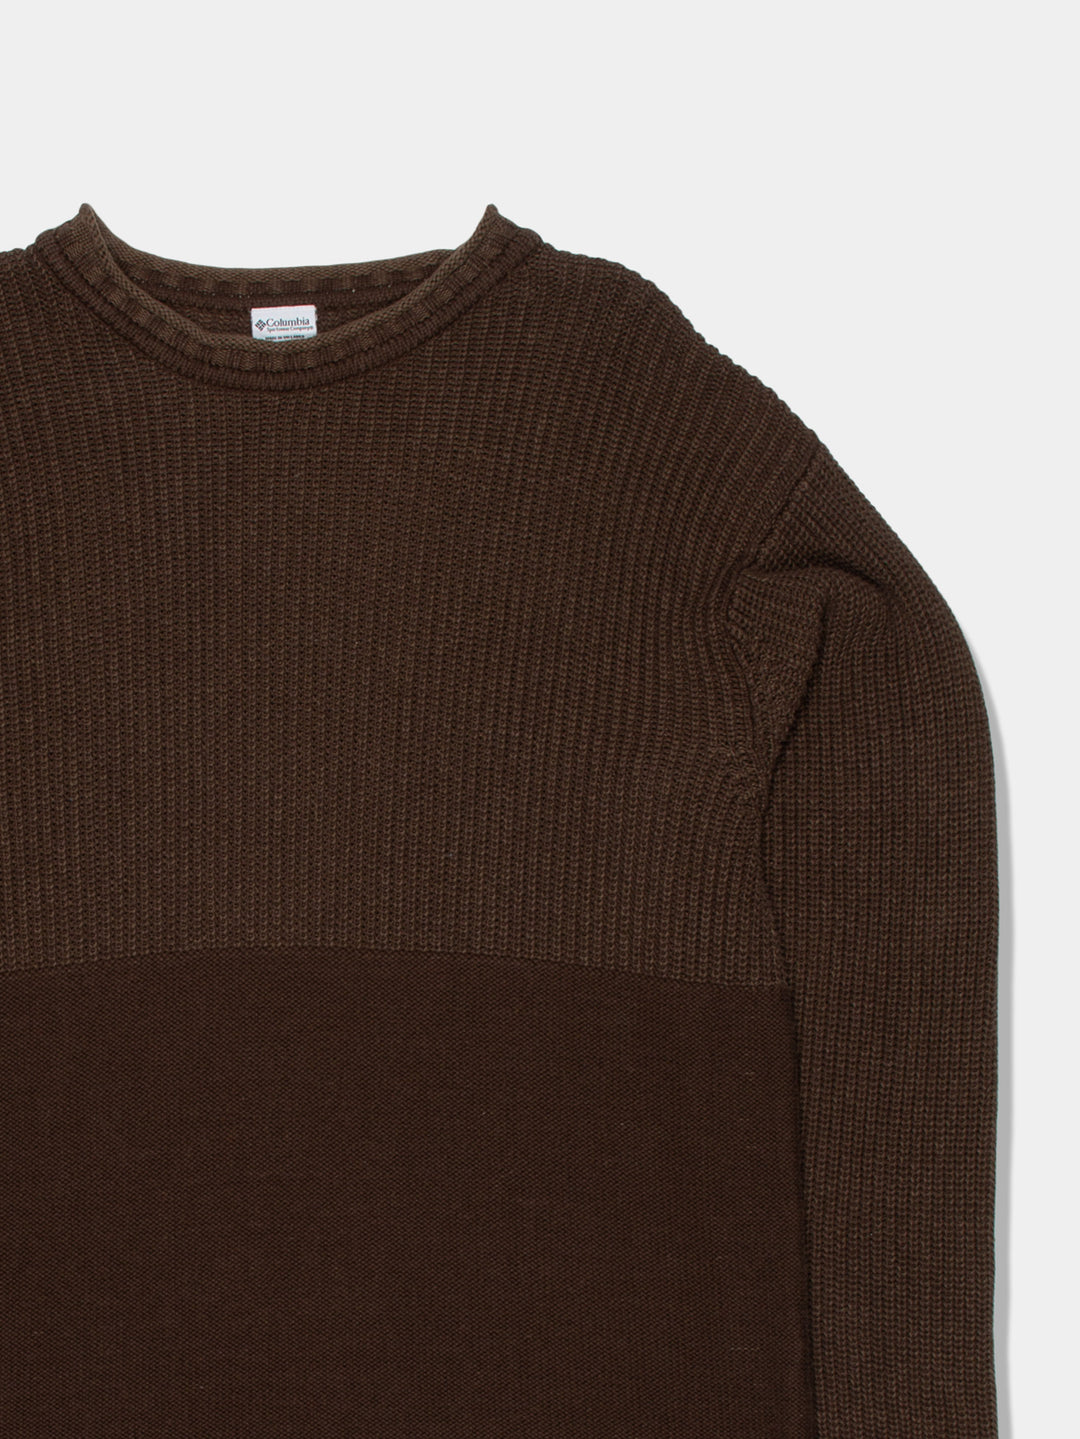 Vintage Columbia Brown Sweater (XL)